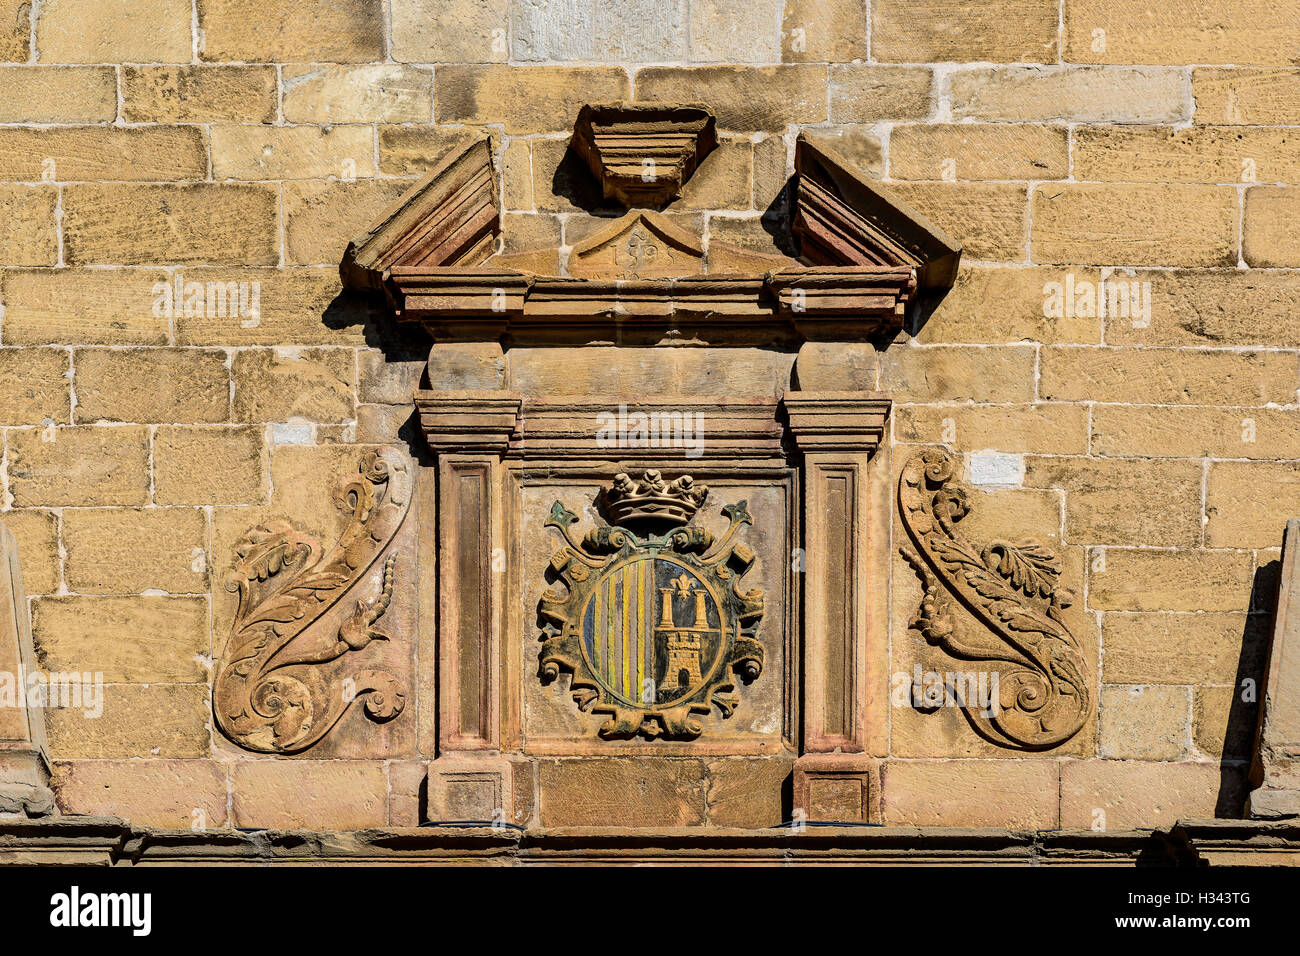 Old shield of the town on the facade of City Hall in Sos del Rey Católico, Five Villas, Zaragoza, Aragón, Spain, Europe. Stock Photo